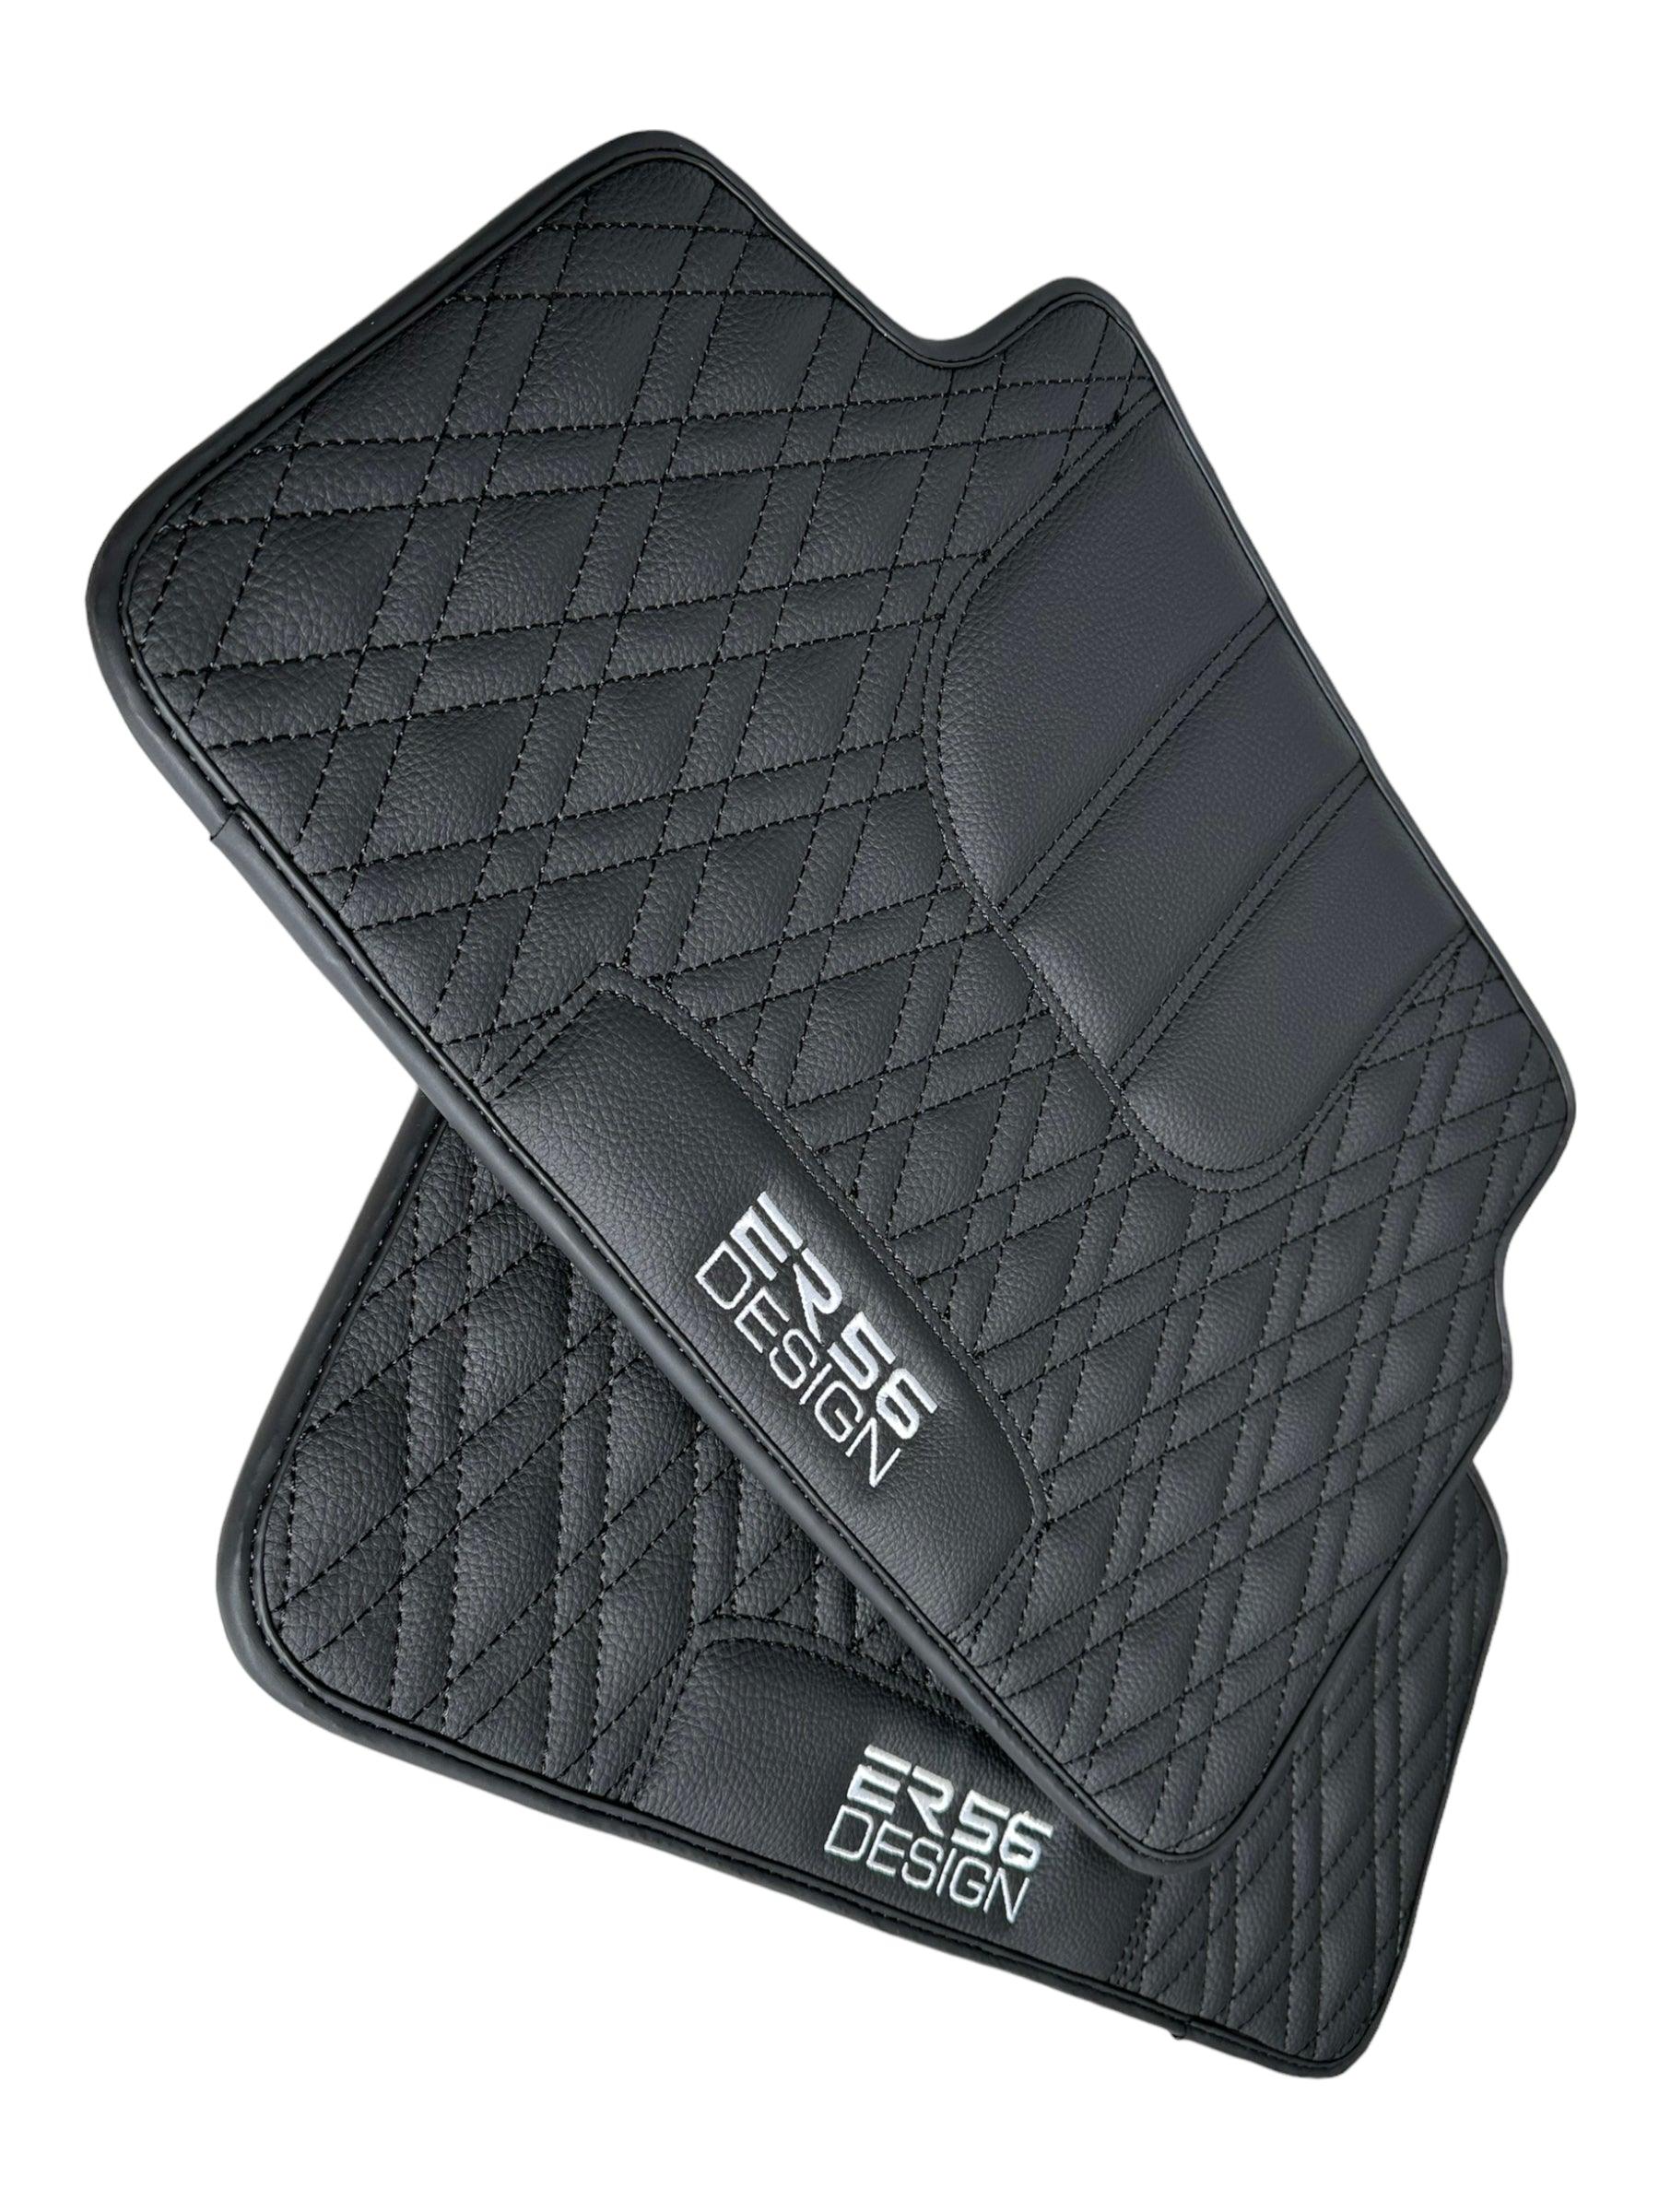 Floor Mats For BMW 7 Series G11 Black Leather Er56 Design - AutoWin